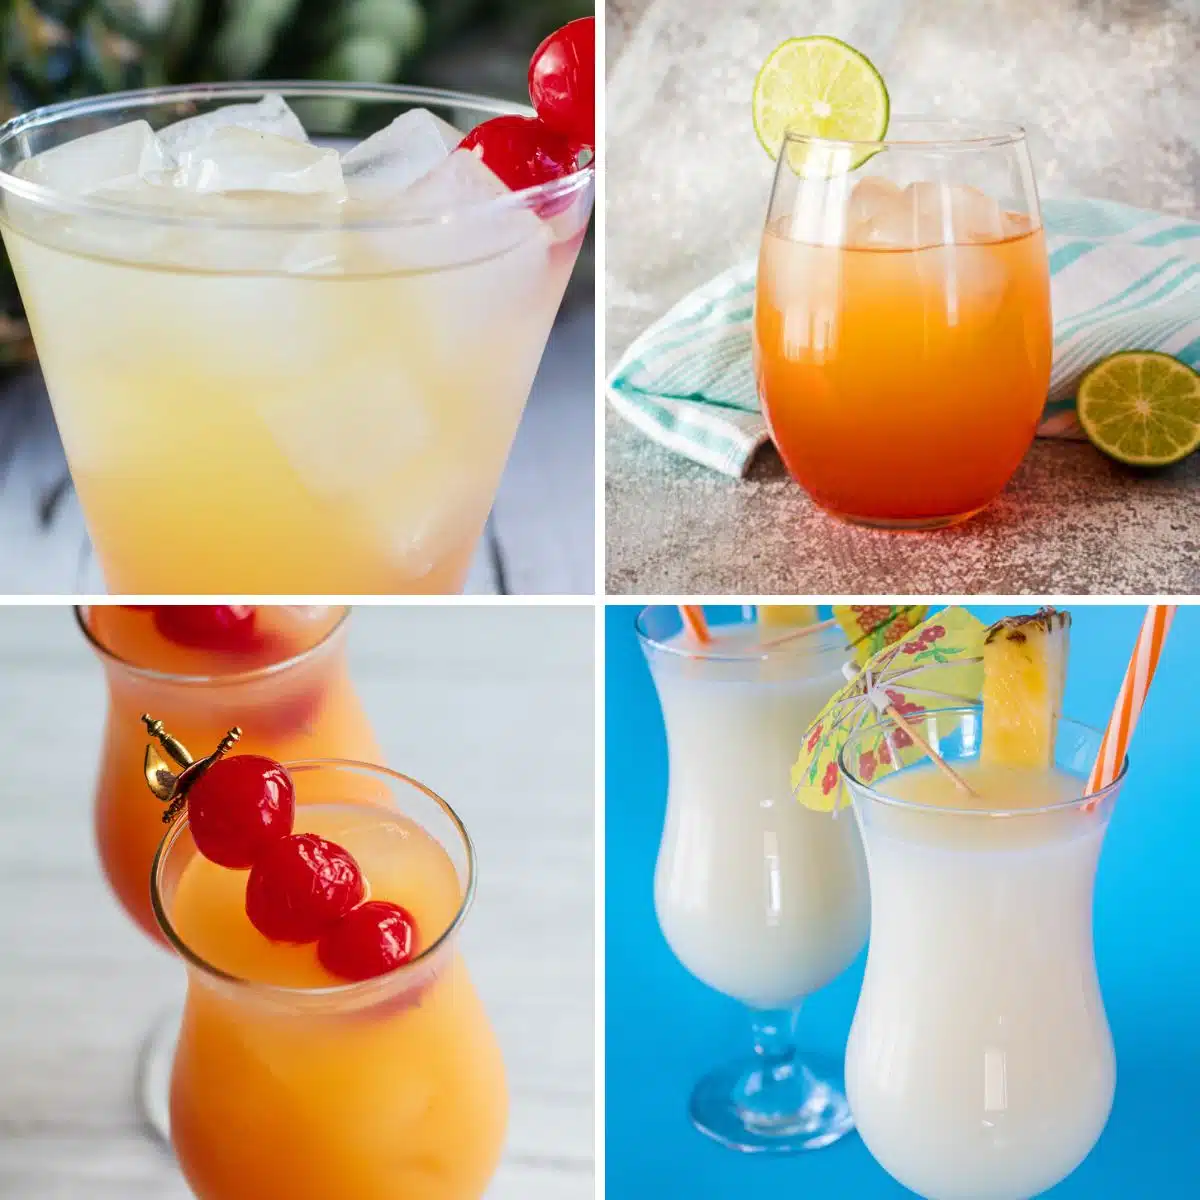 Square split image showing different Malibu rum cocktails.